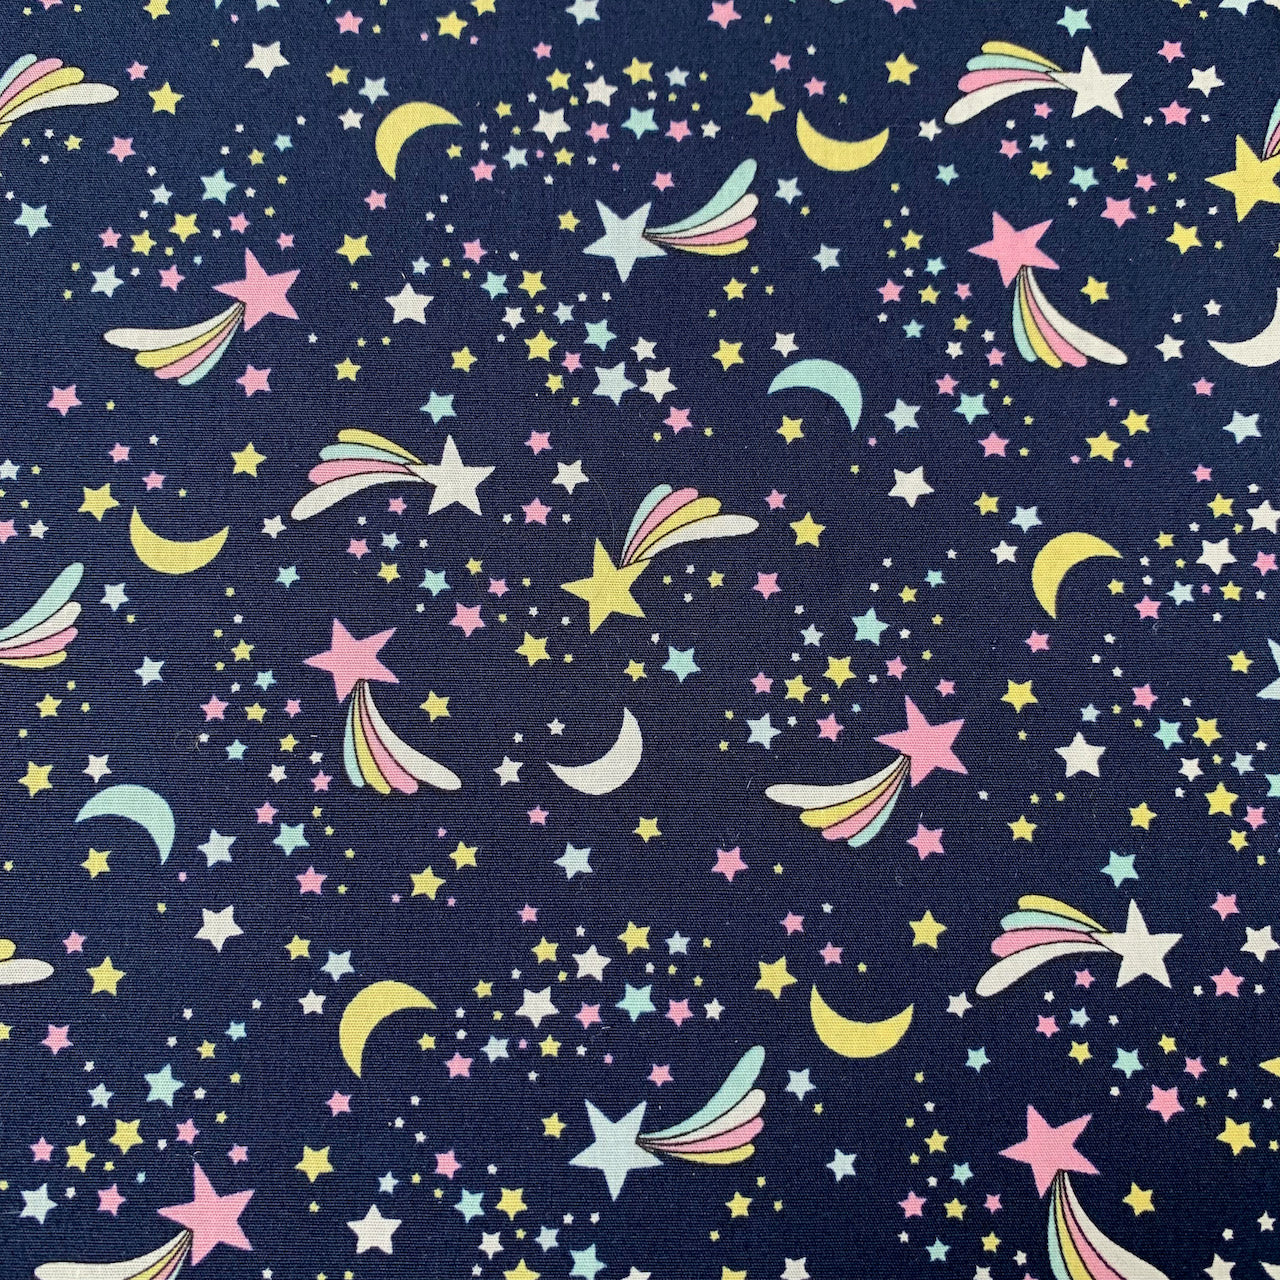 Fabric Felt Sheet - Shooting Stars